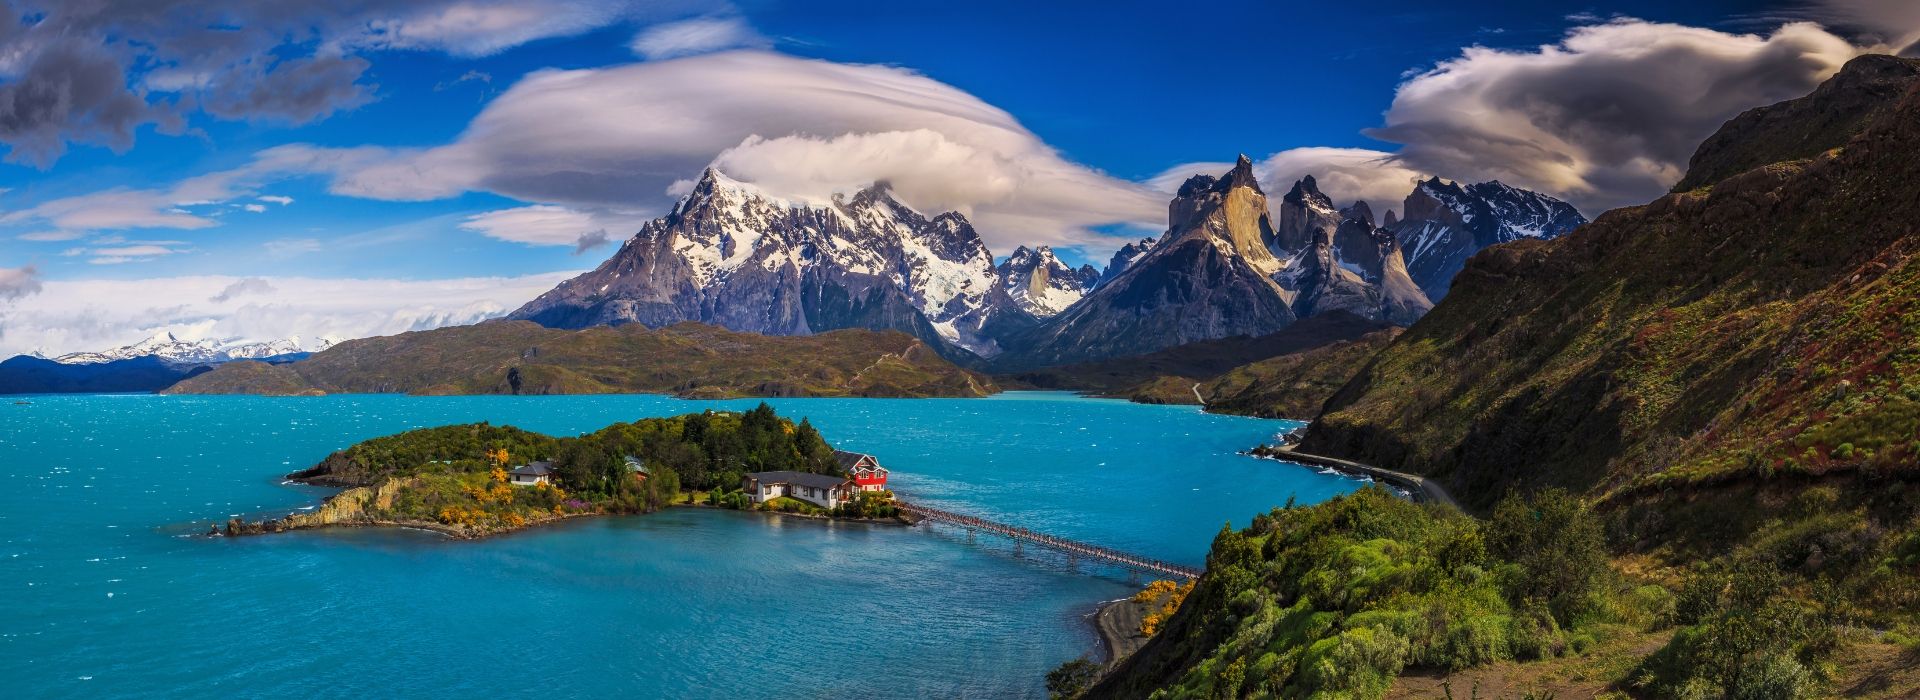 Tour Argentina: Patagonia e terra del fuoco